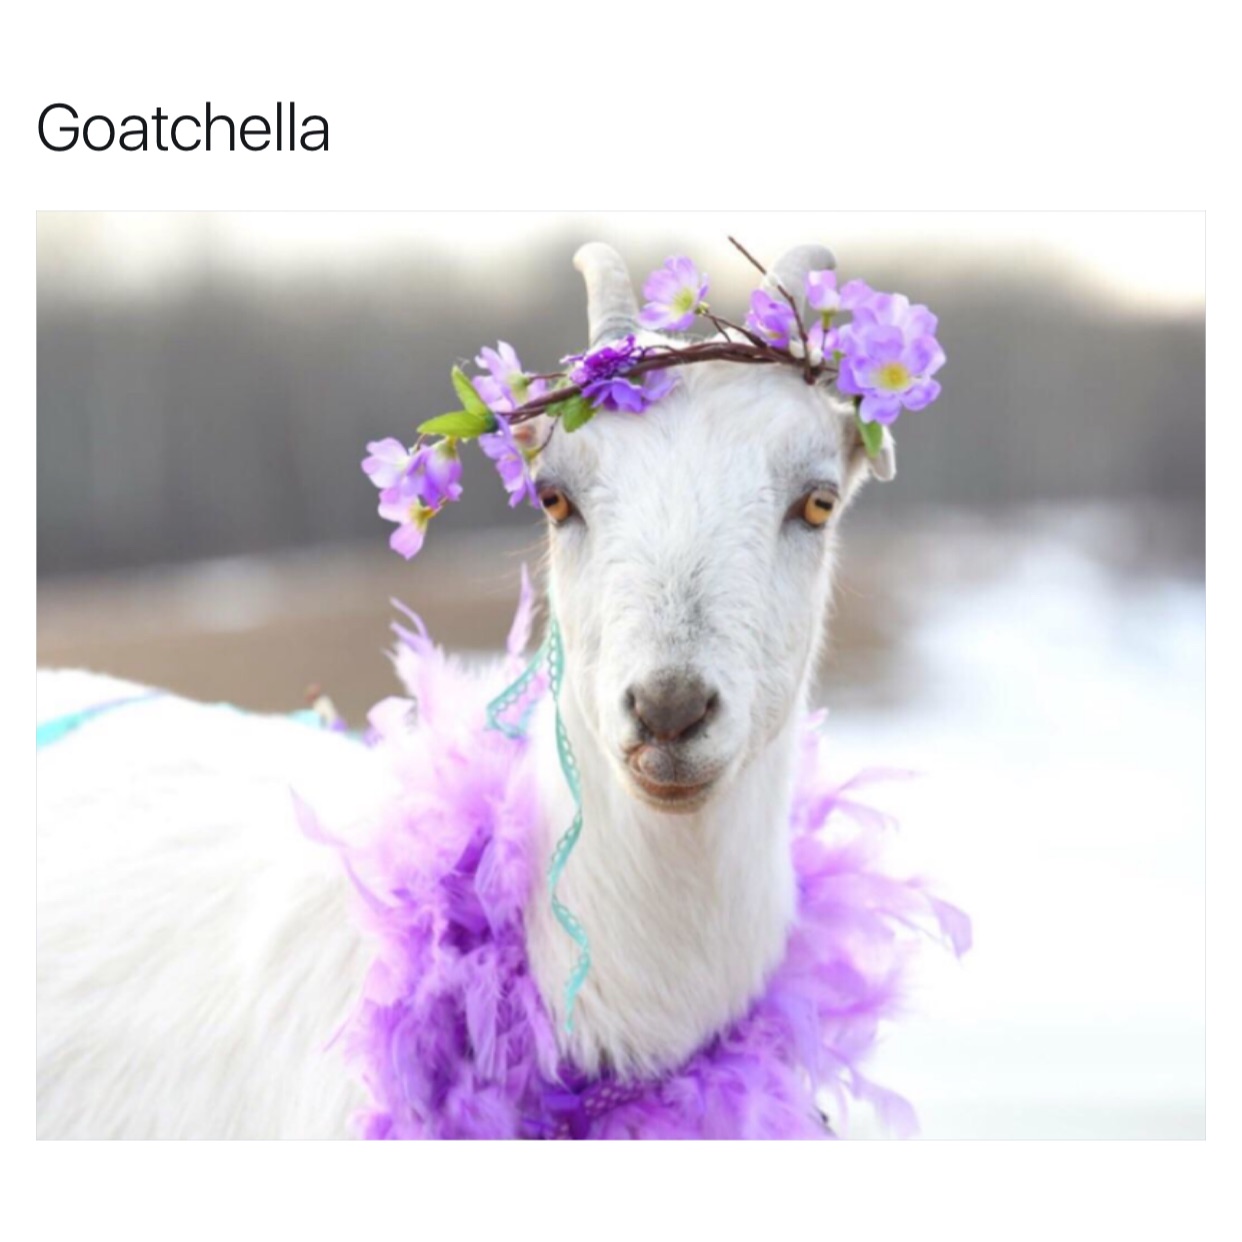 goat maternity - Goatchella